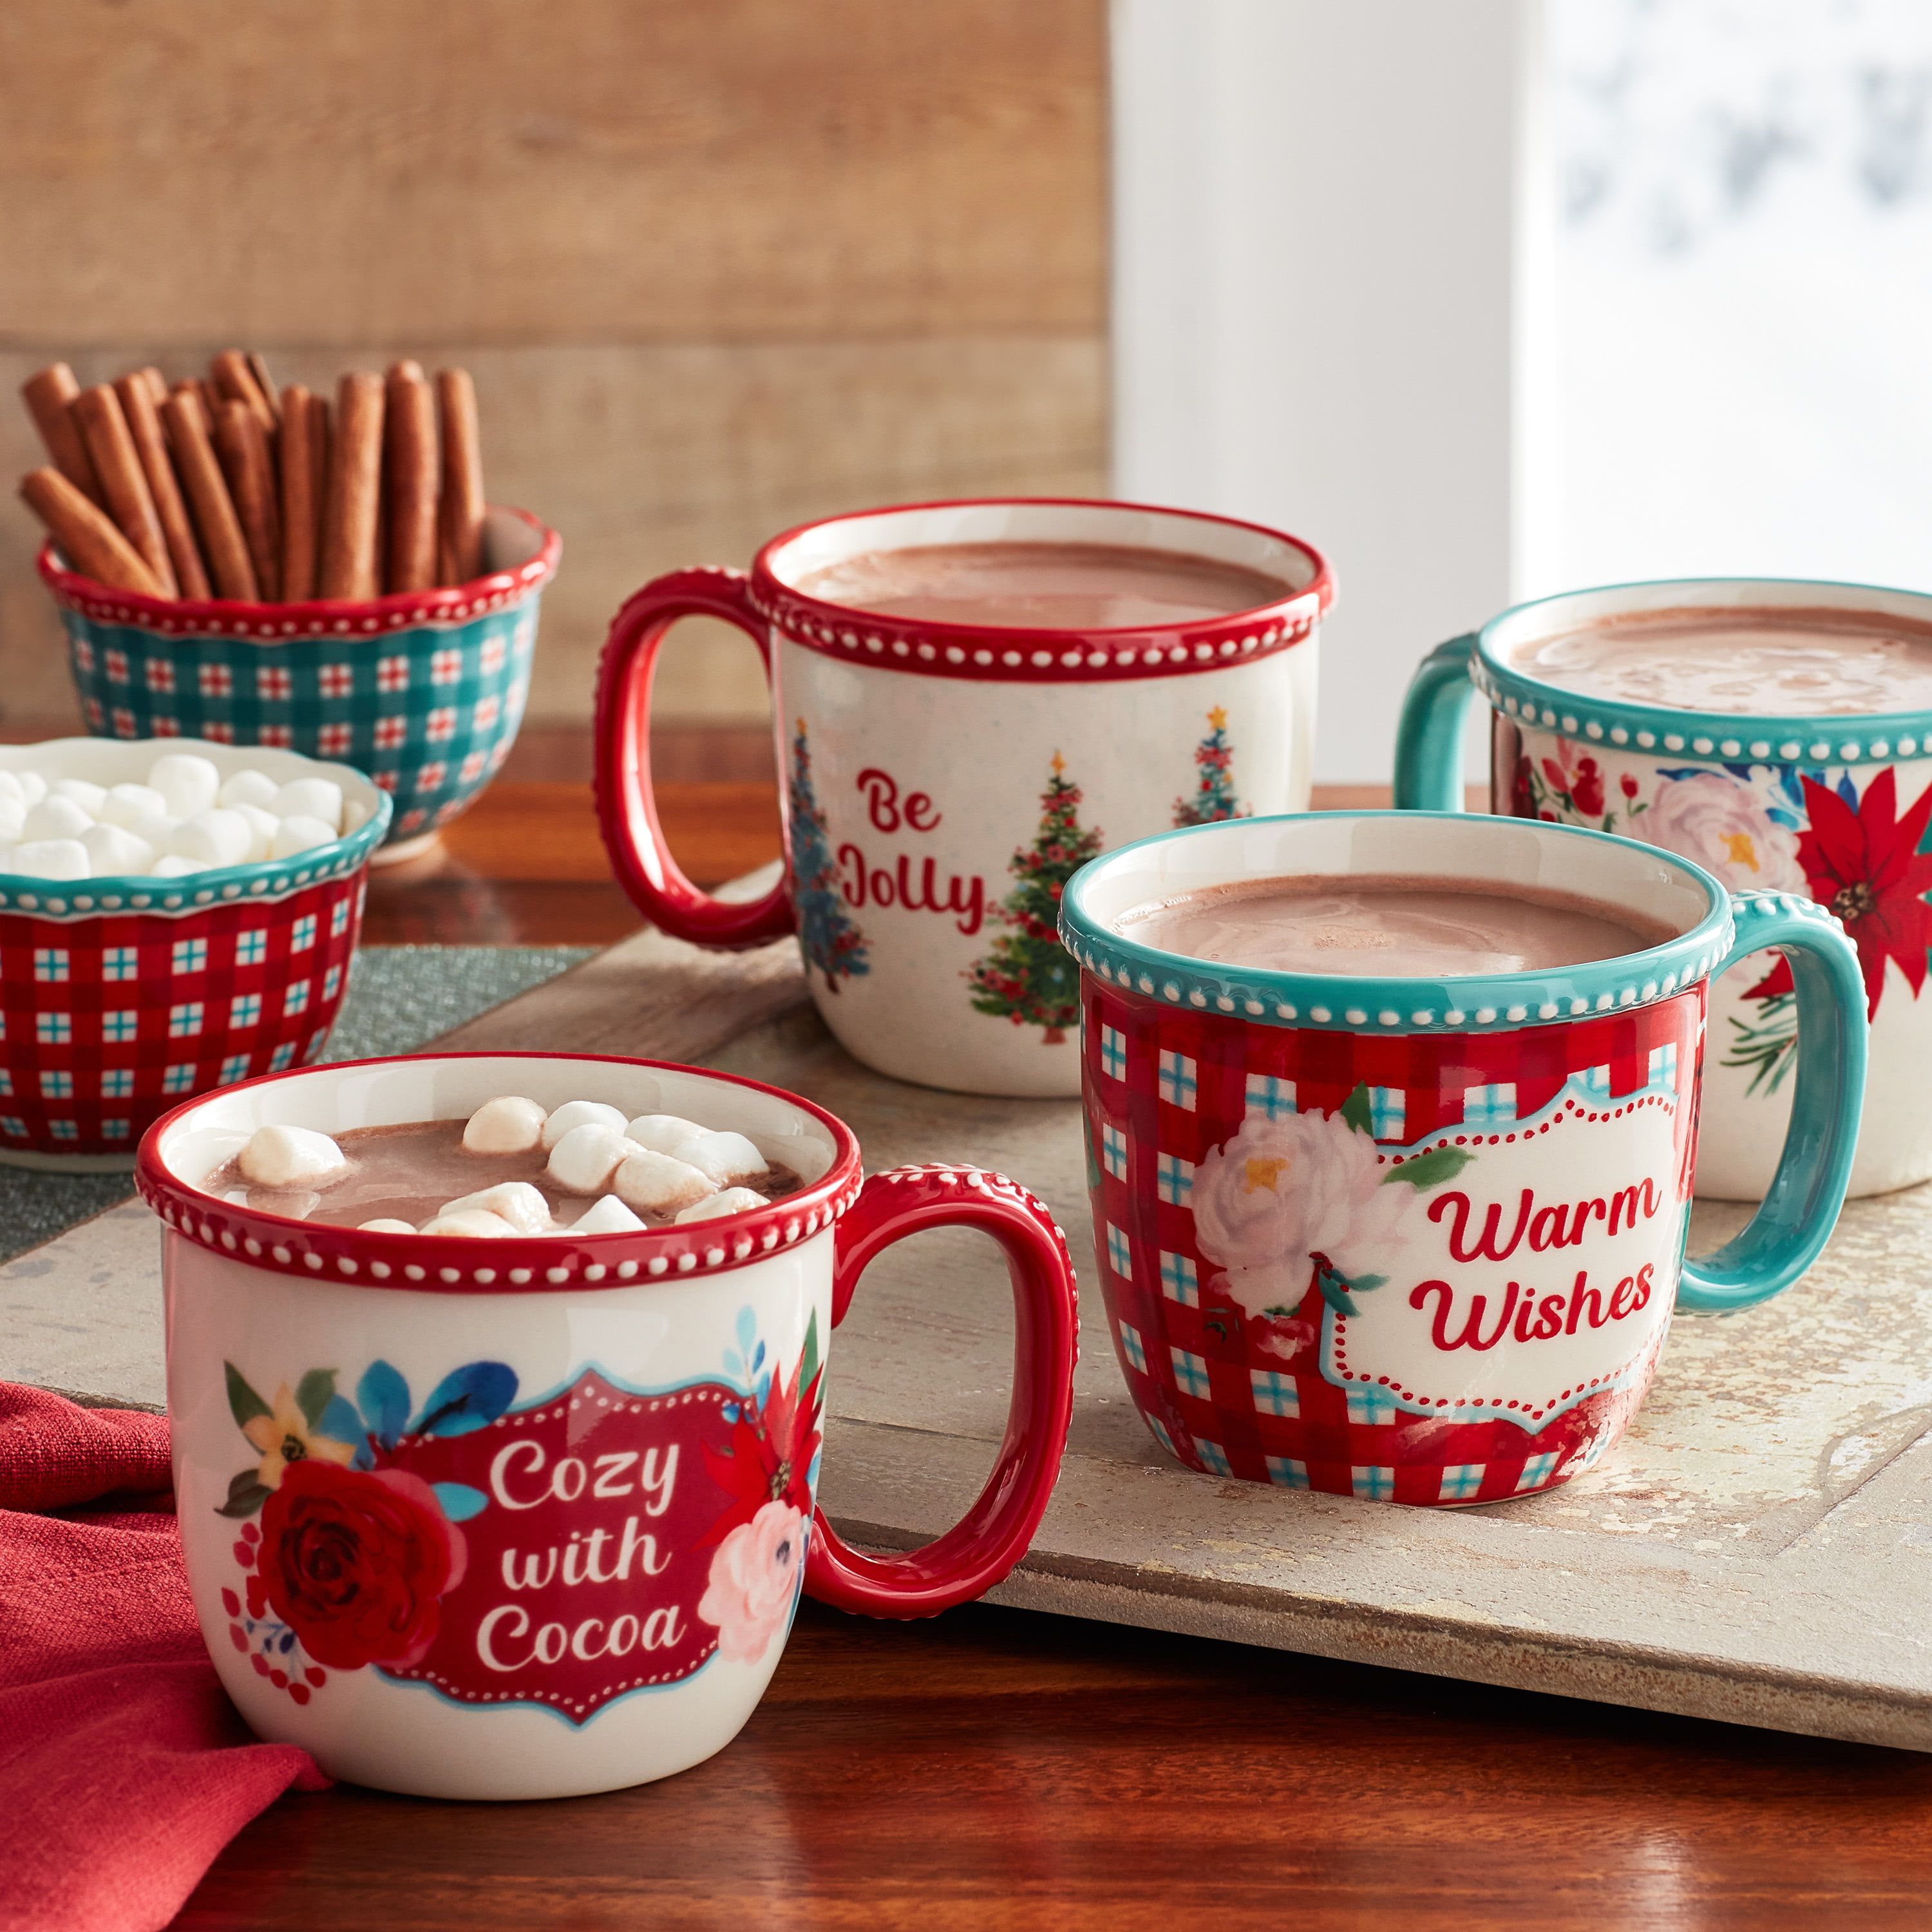 The Pioneer Woman Wishful Winter Set of 4 Mugs